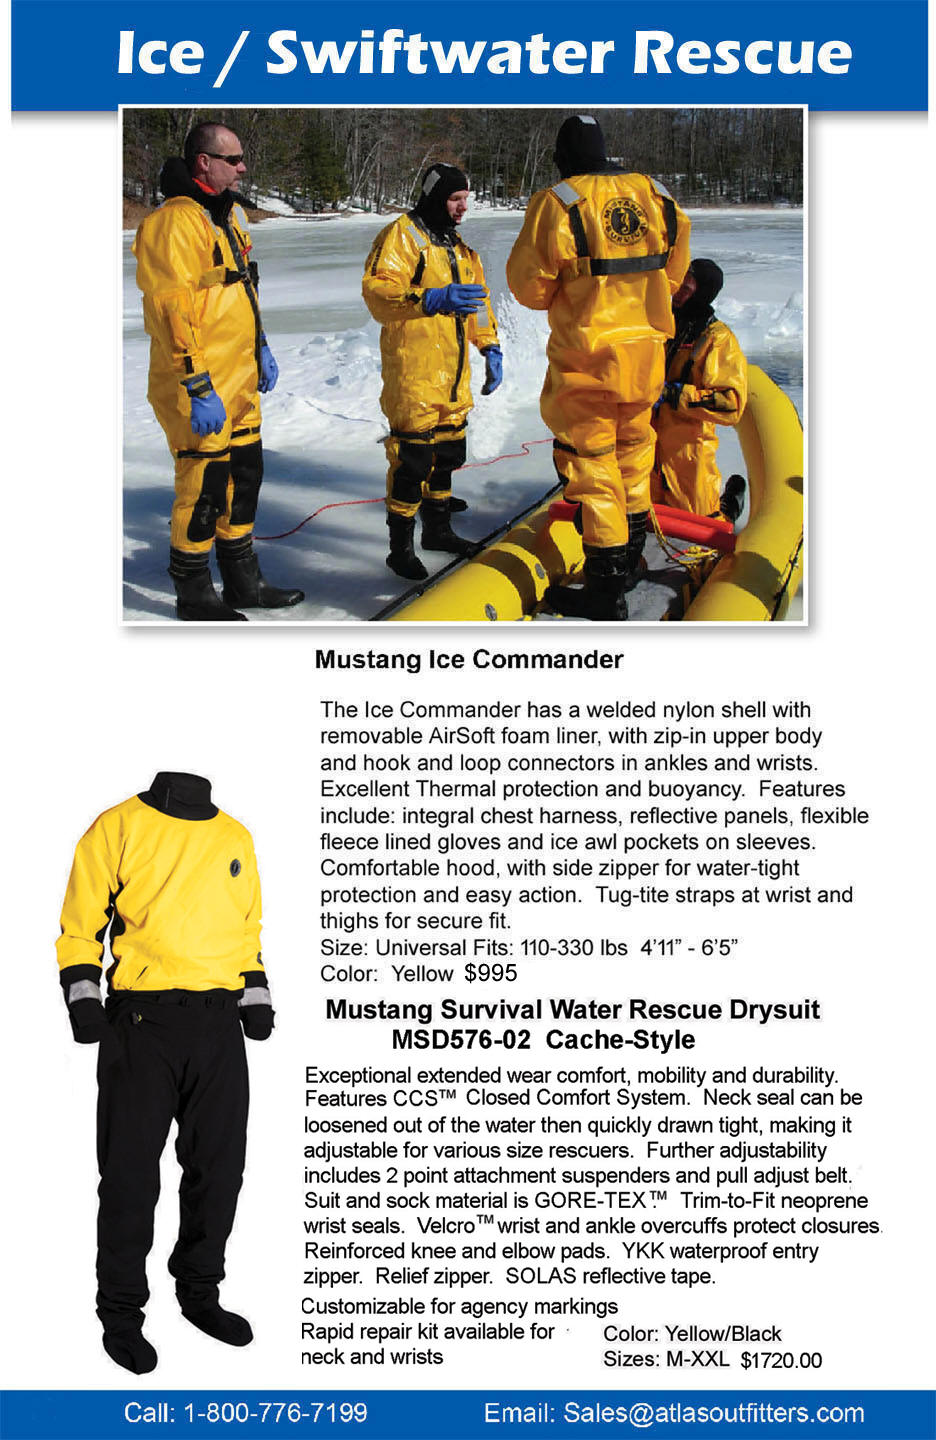 Mustang Survival Ice Commander, Mustang Survival Water rescue drysuit